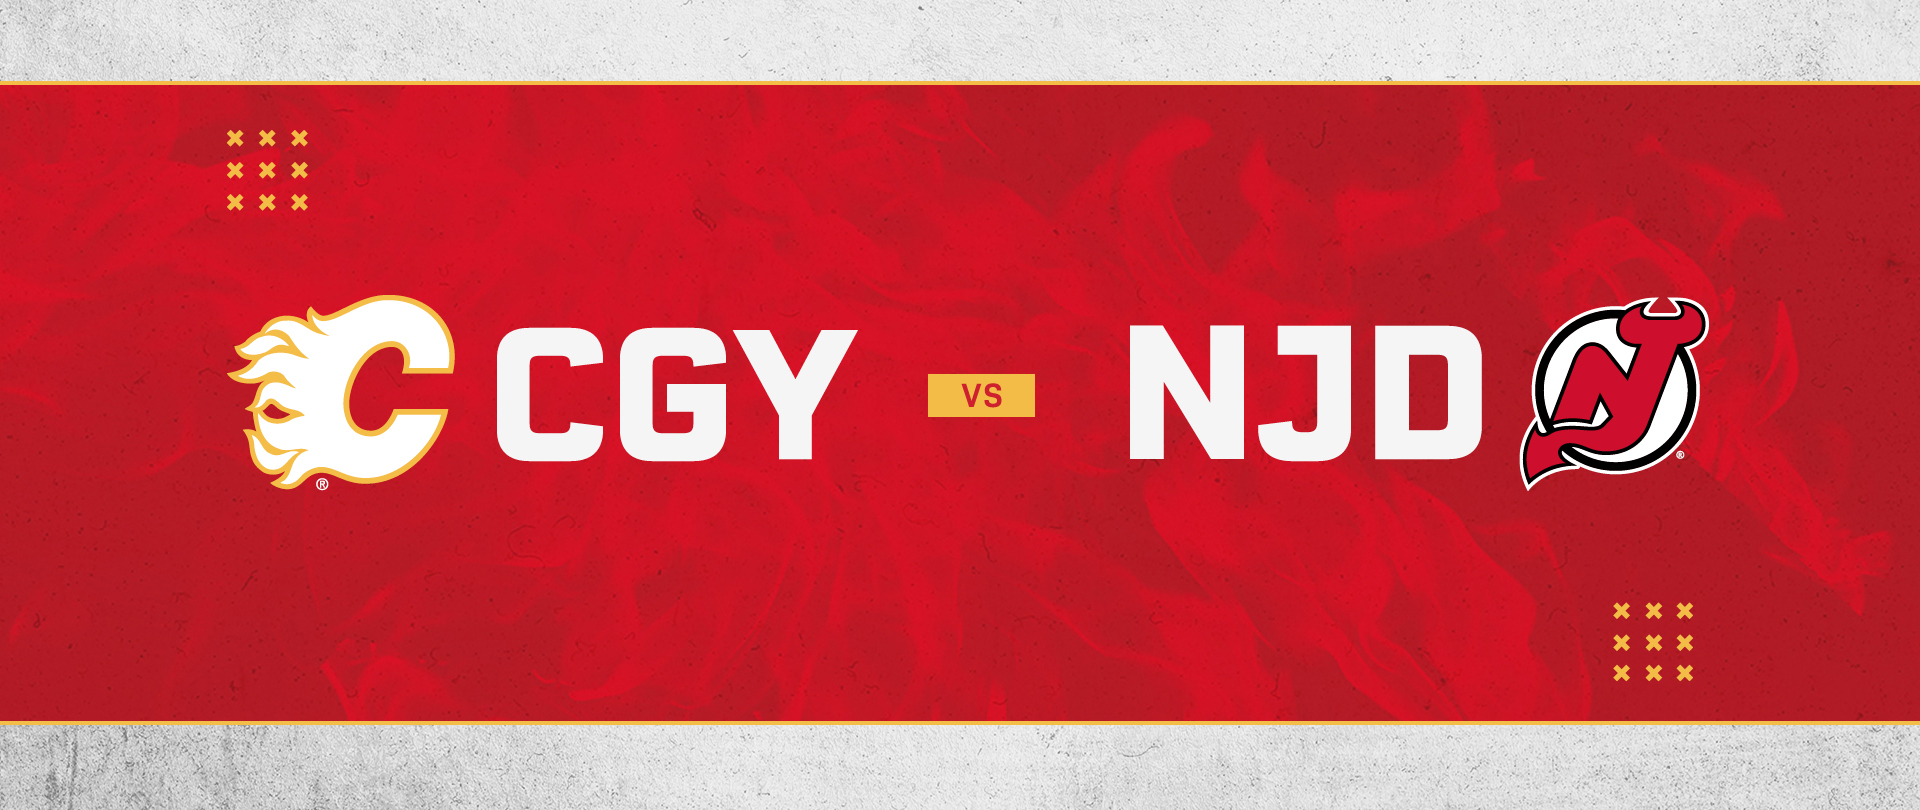 Calgary Flames vs. New Jersey Devils Tickets